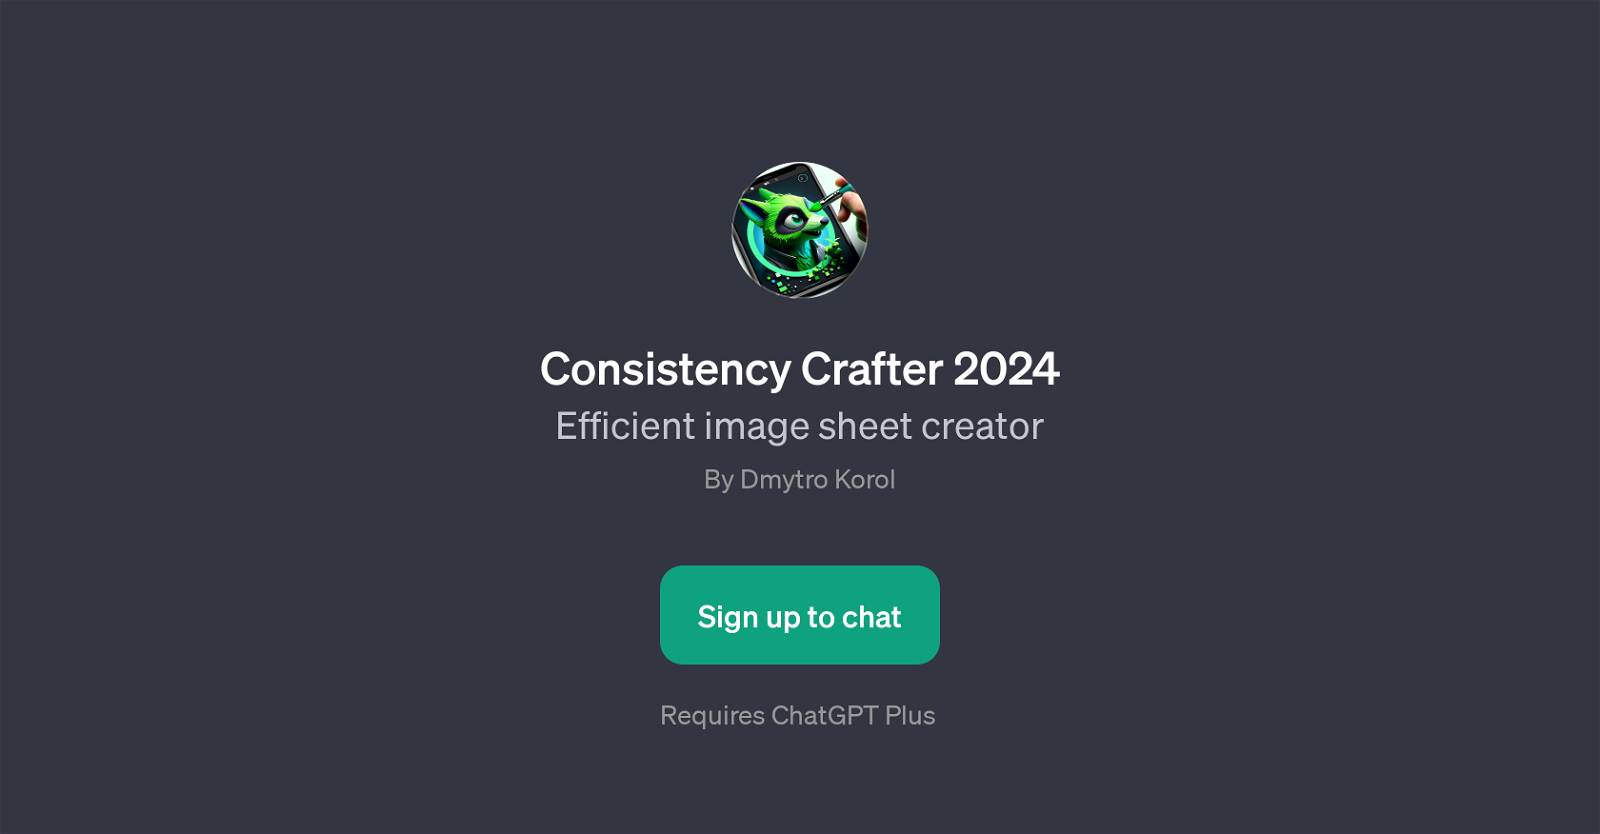 Consistency Crafter 2024 website